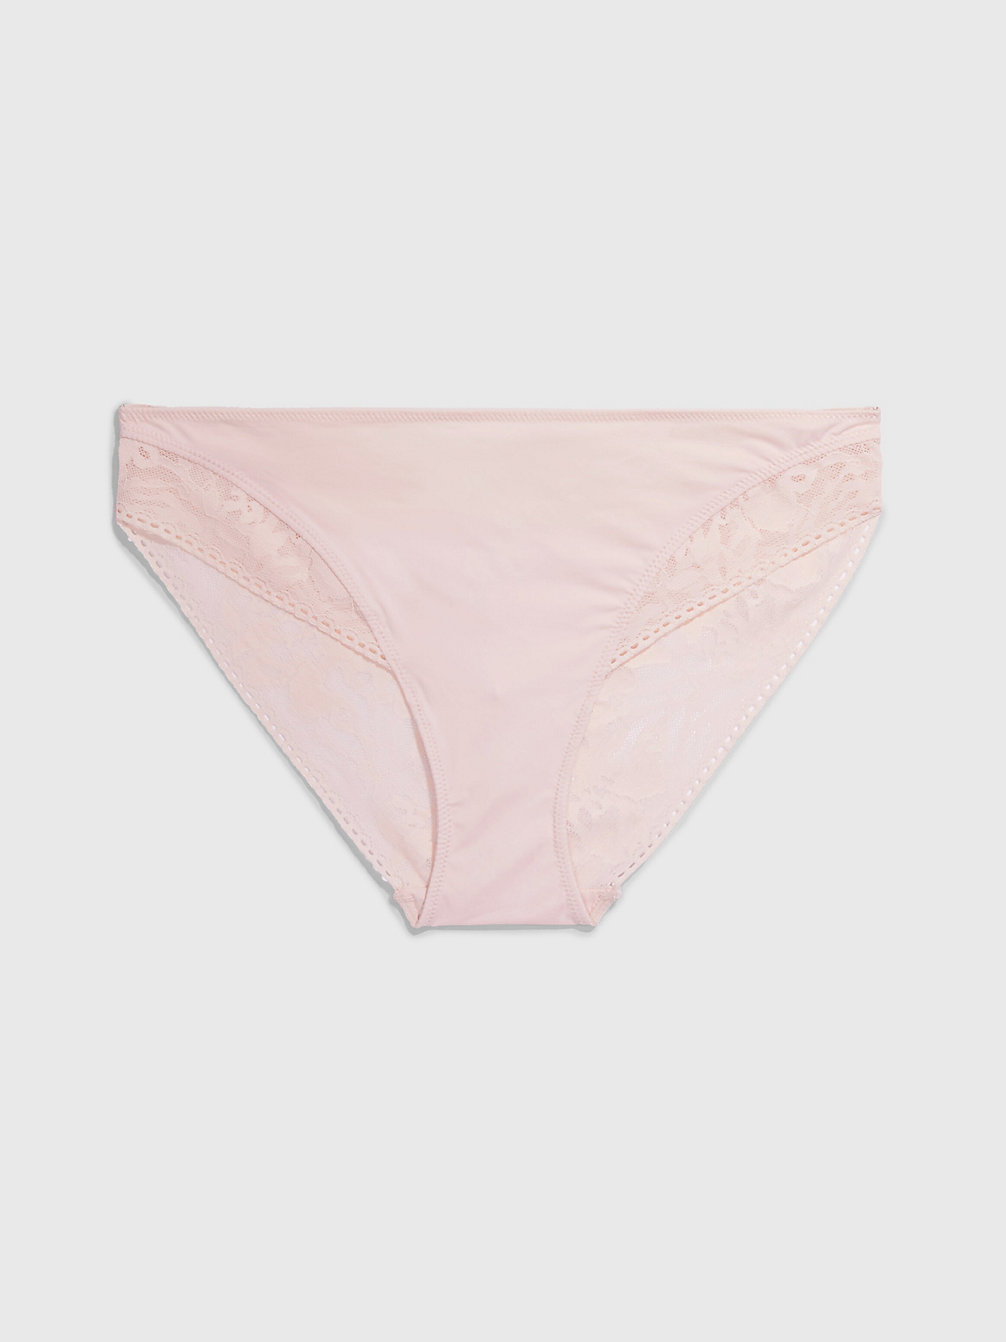 PINK Bikini Briefs - Ultra Soft Lace undefined women Calvin Klein